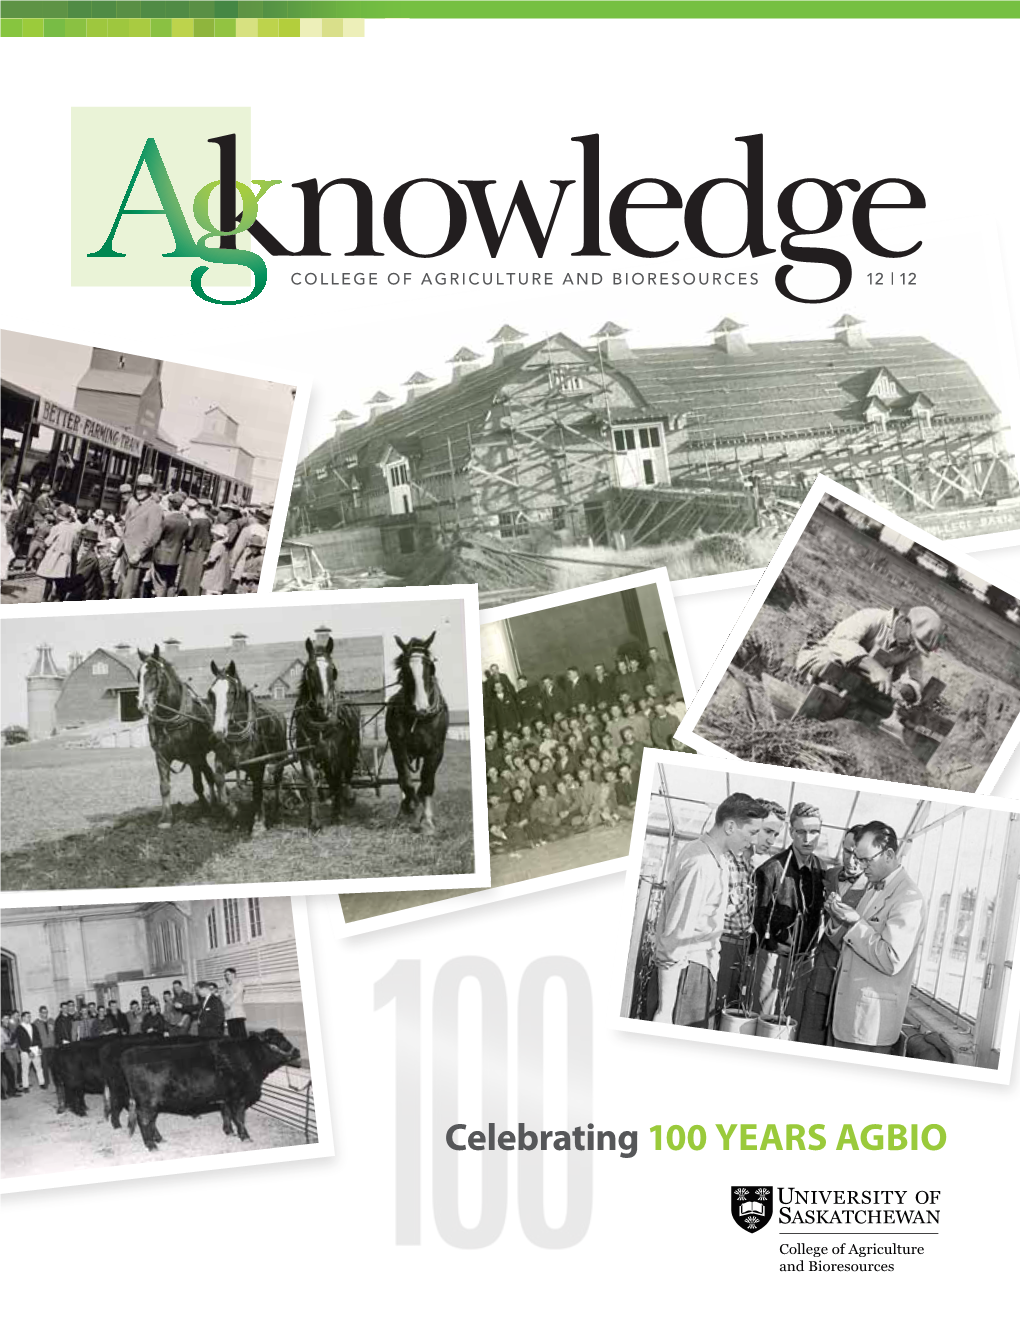 Celebrating 100 YEARS AGBIO